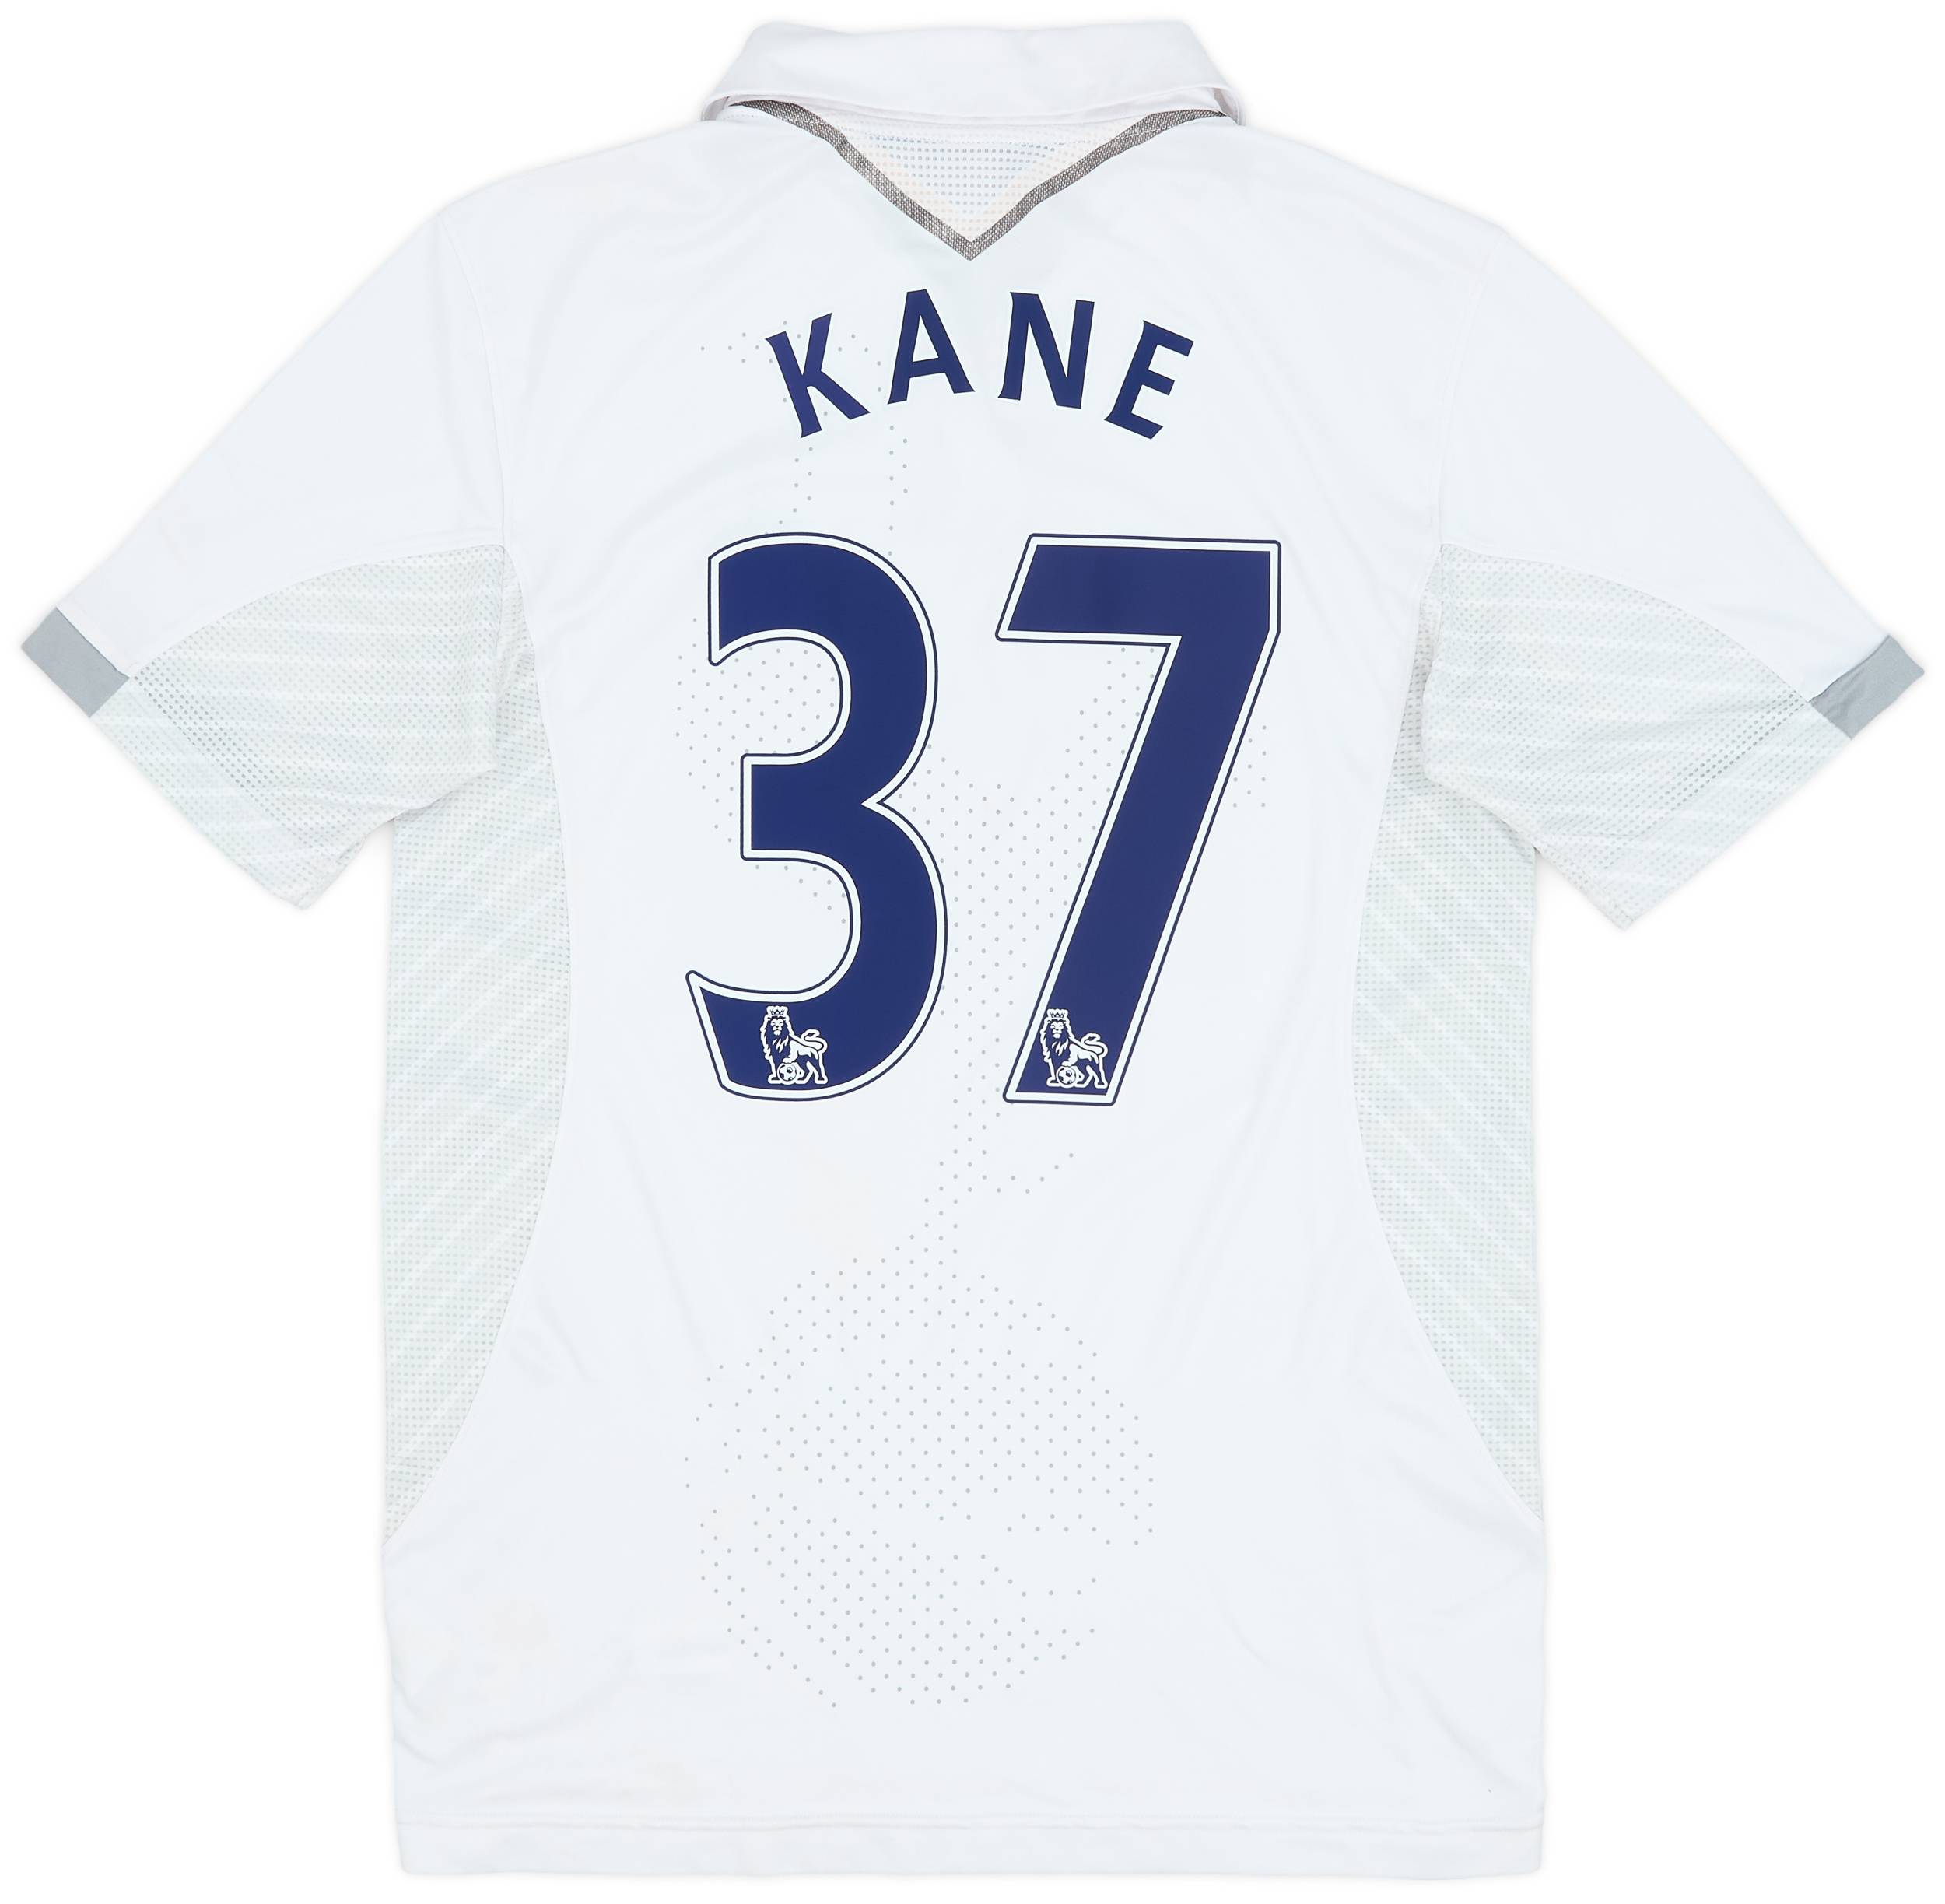 2012-13 Tottenham Home Shirt Kane #37 - 8/10 - (S)